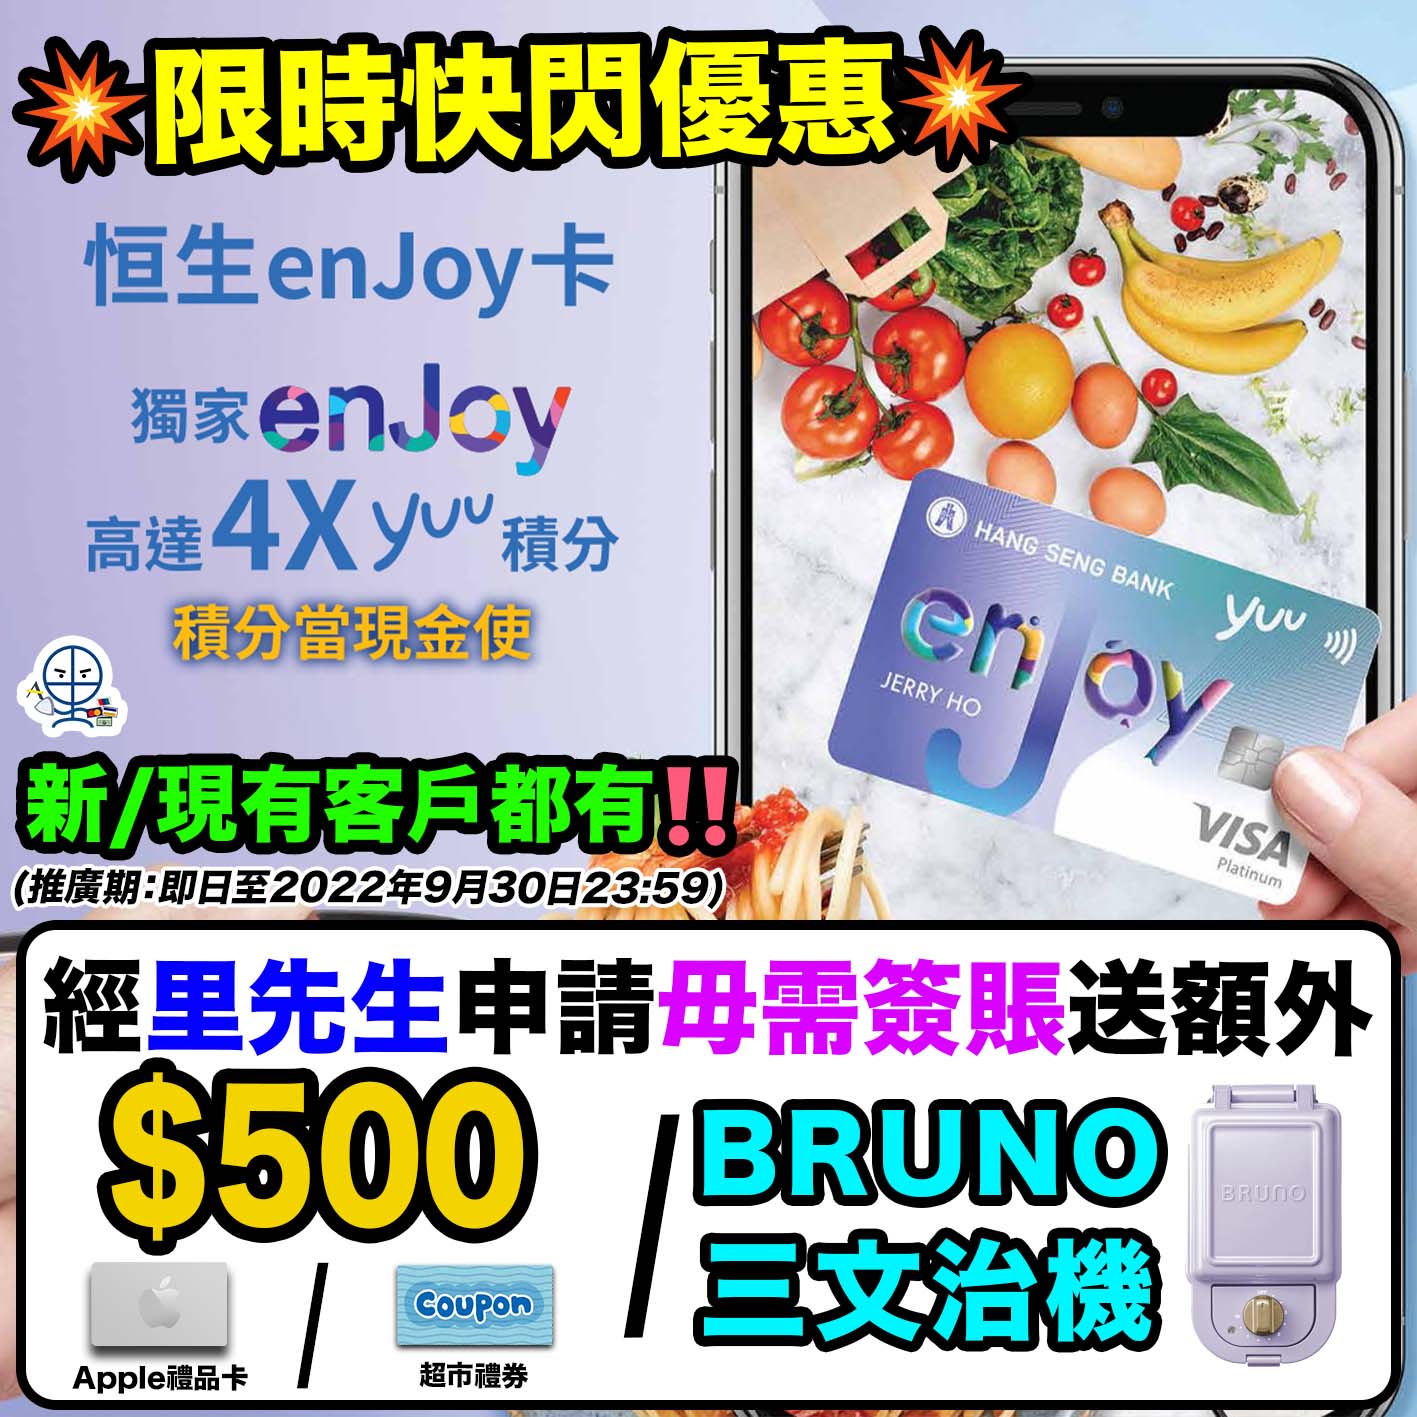 【SmarTone出iPhone上台優惠】恒生信用卡客戶獨享高達HK$2,300折扣